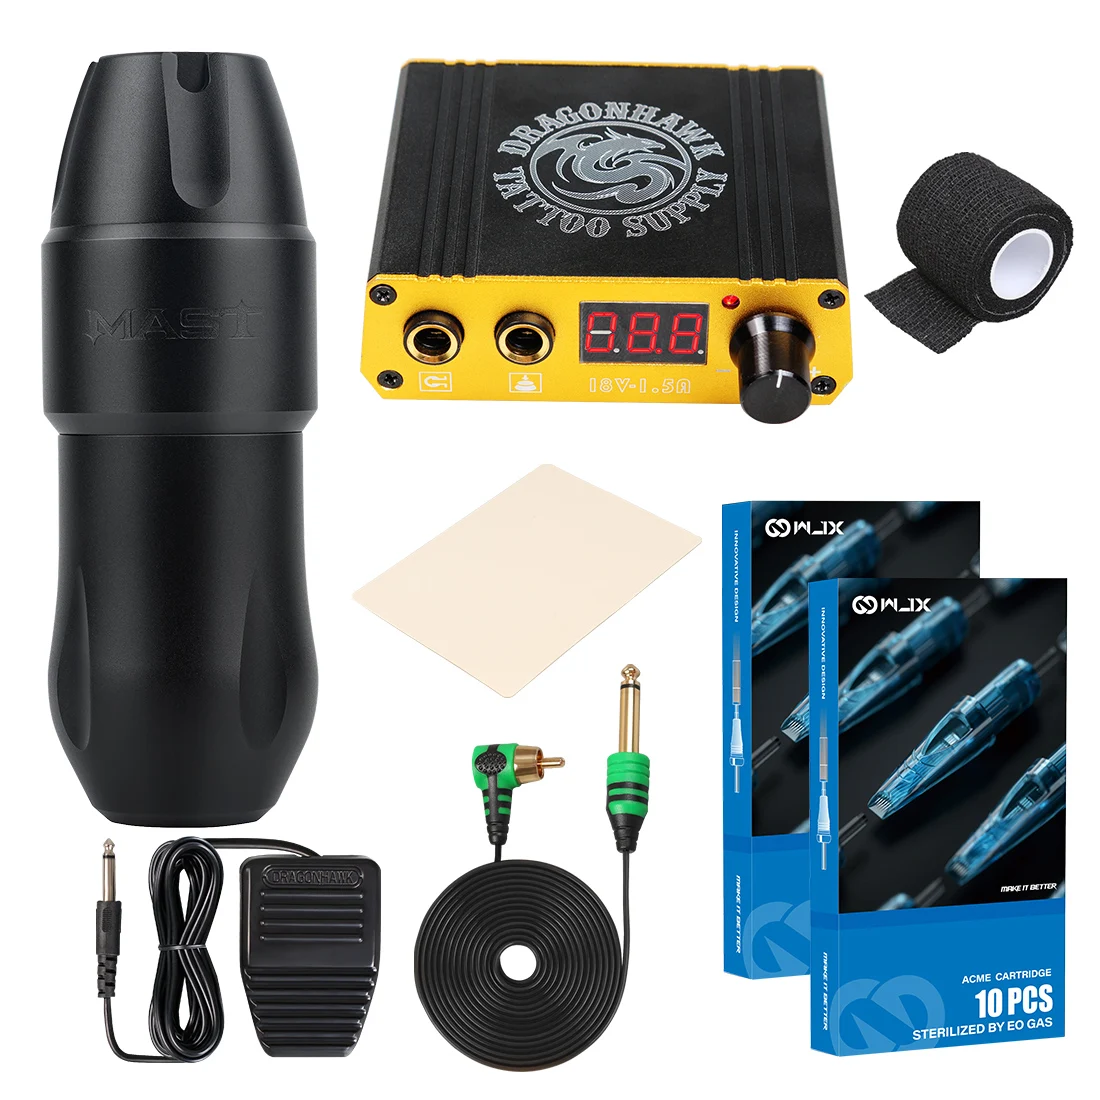 

Dragonhawk Mast Tour Pro Top Tattoo Machine Set Motor Rotary Pen Makeup Mini Power Supply with WJX Cartridge Needles Kit